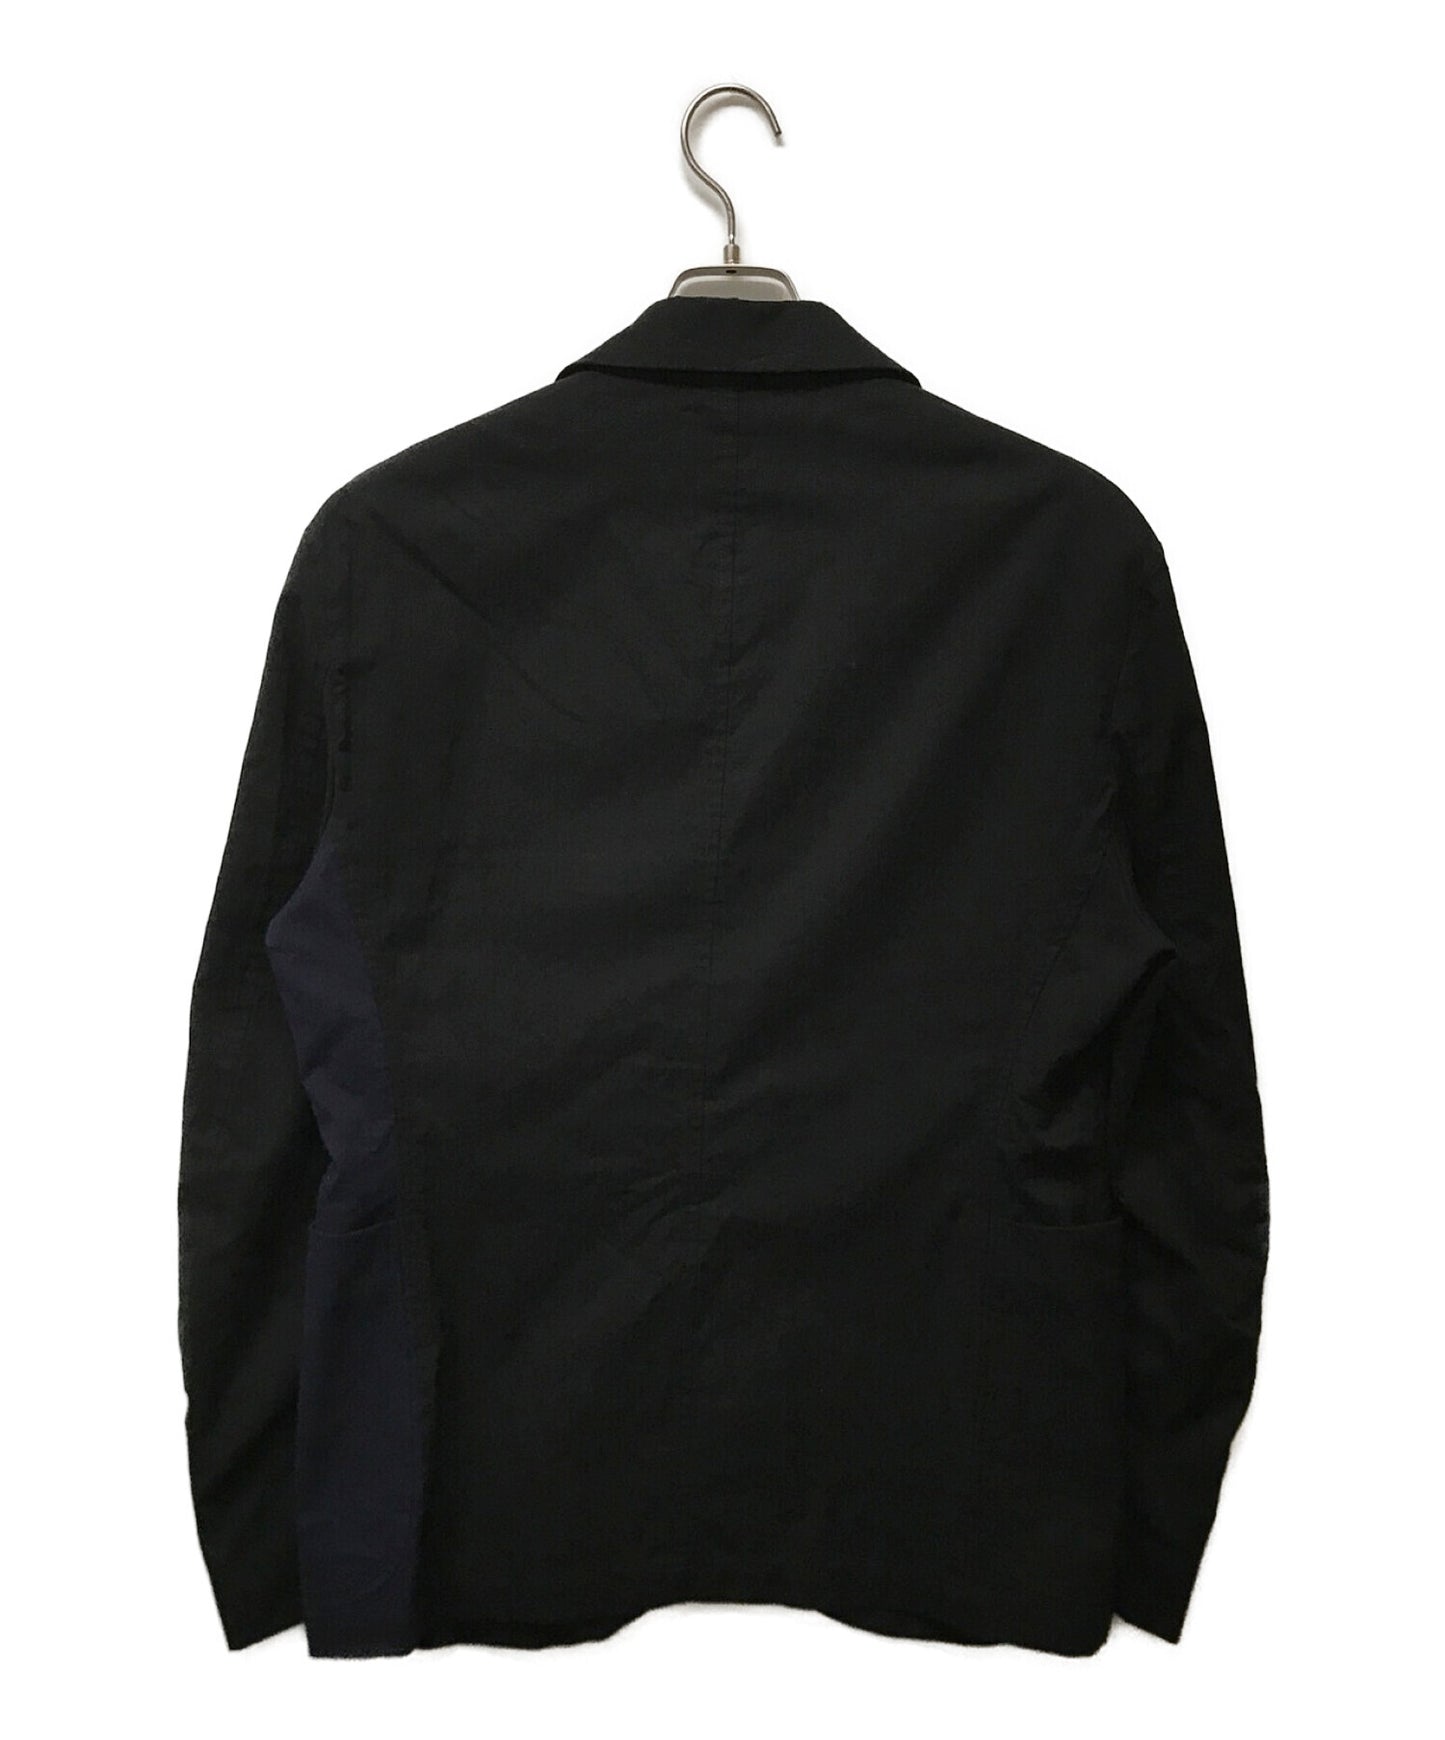 yohji yamamoto pour homme 맞춤형 재킷 HO-J18-806